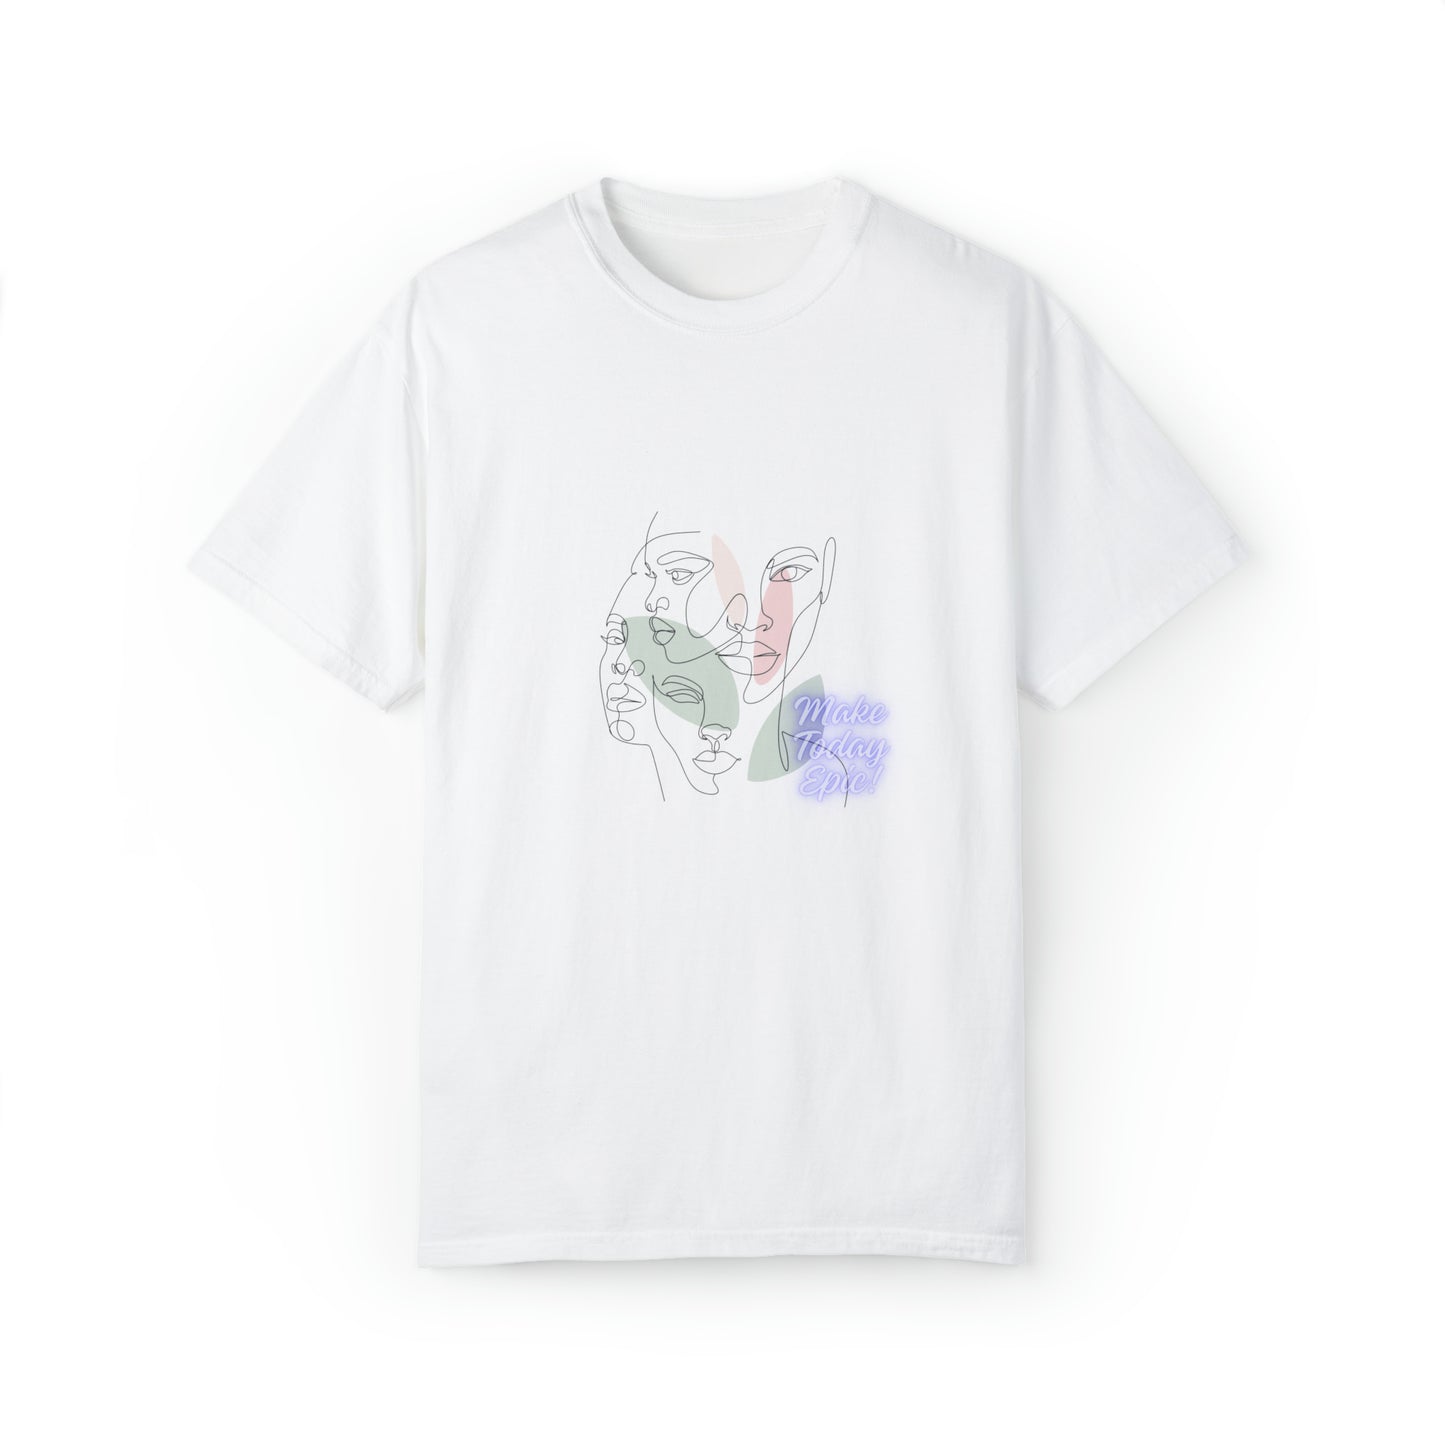 Make Today Epic - Unisex Garment-Dyed T-shirt